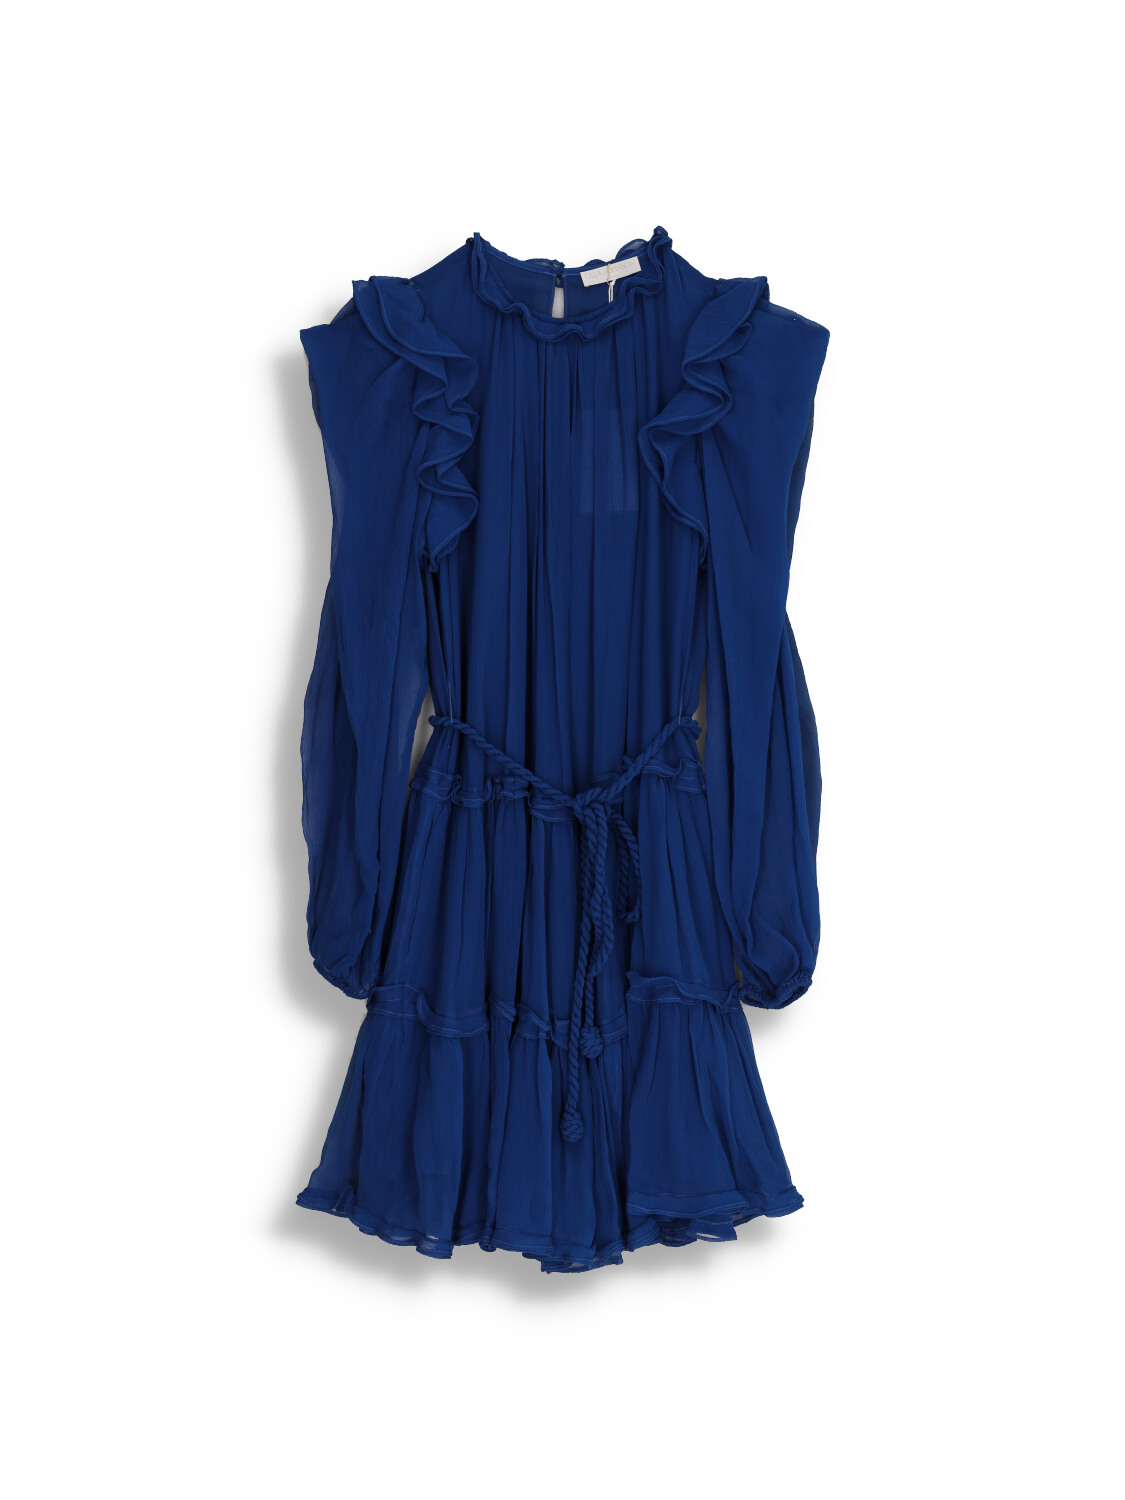 Gaelle - Mini Dress with Ruffled Details in Silk